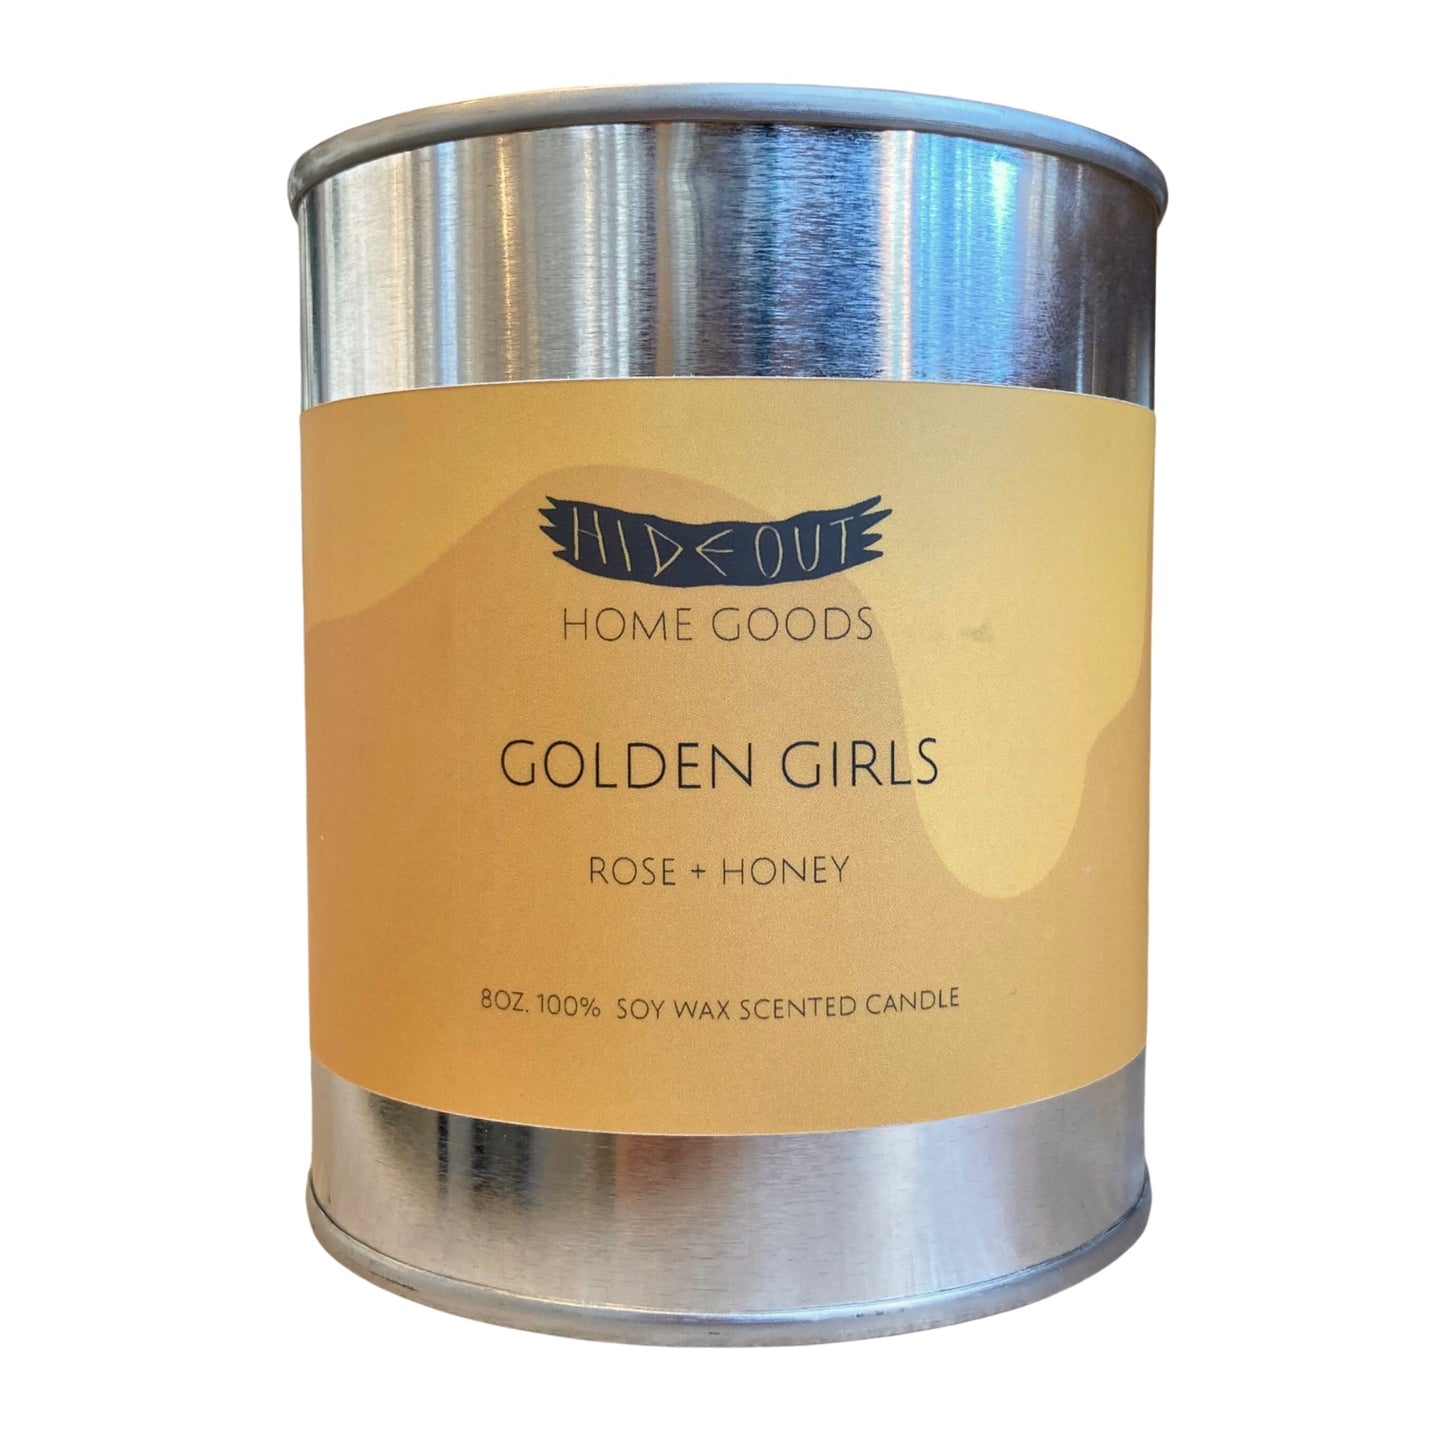 Scented Soy Candle | Golden Girls | Rose + Honey